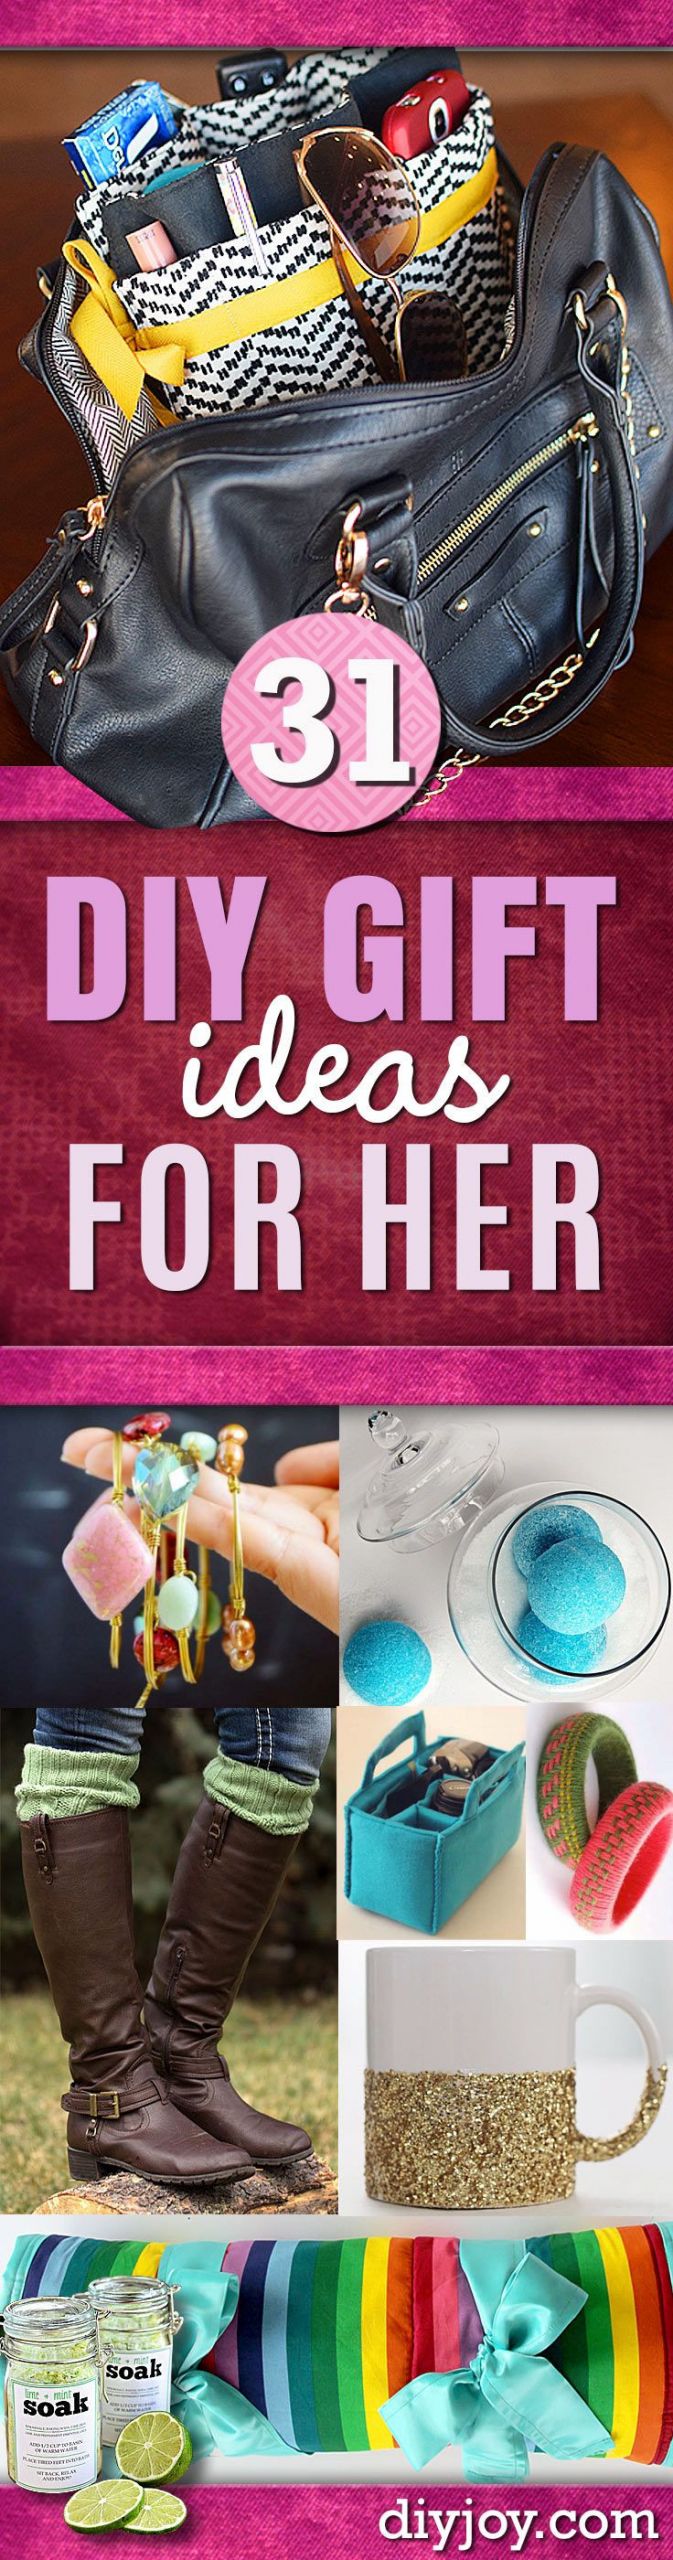 Diy Gift Ideas For Girlfriend
 Super Special DIY Gift Ideas for Her DIY JOY